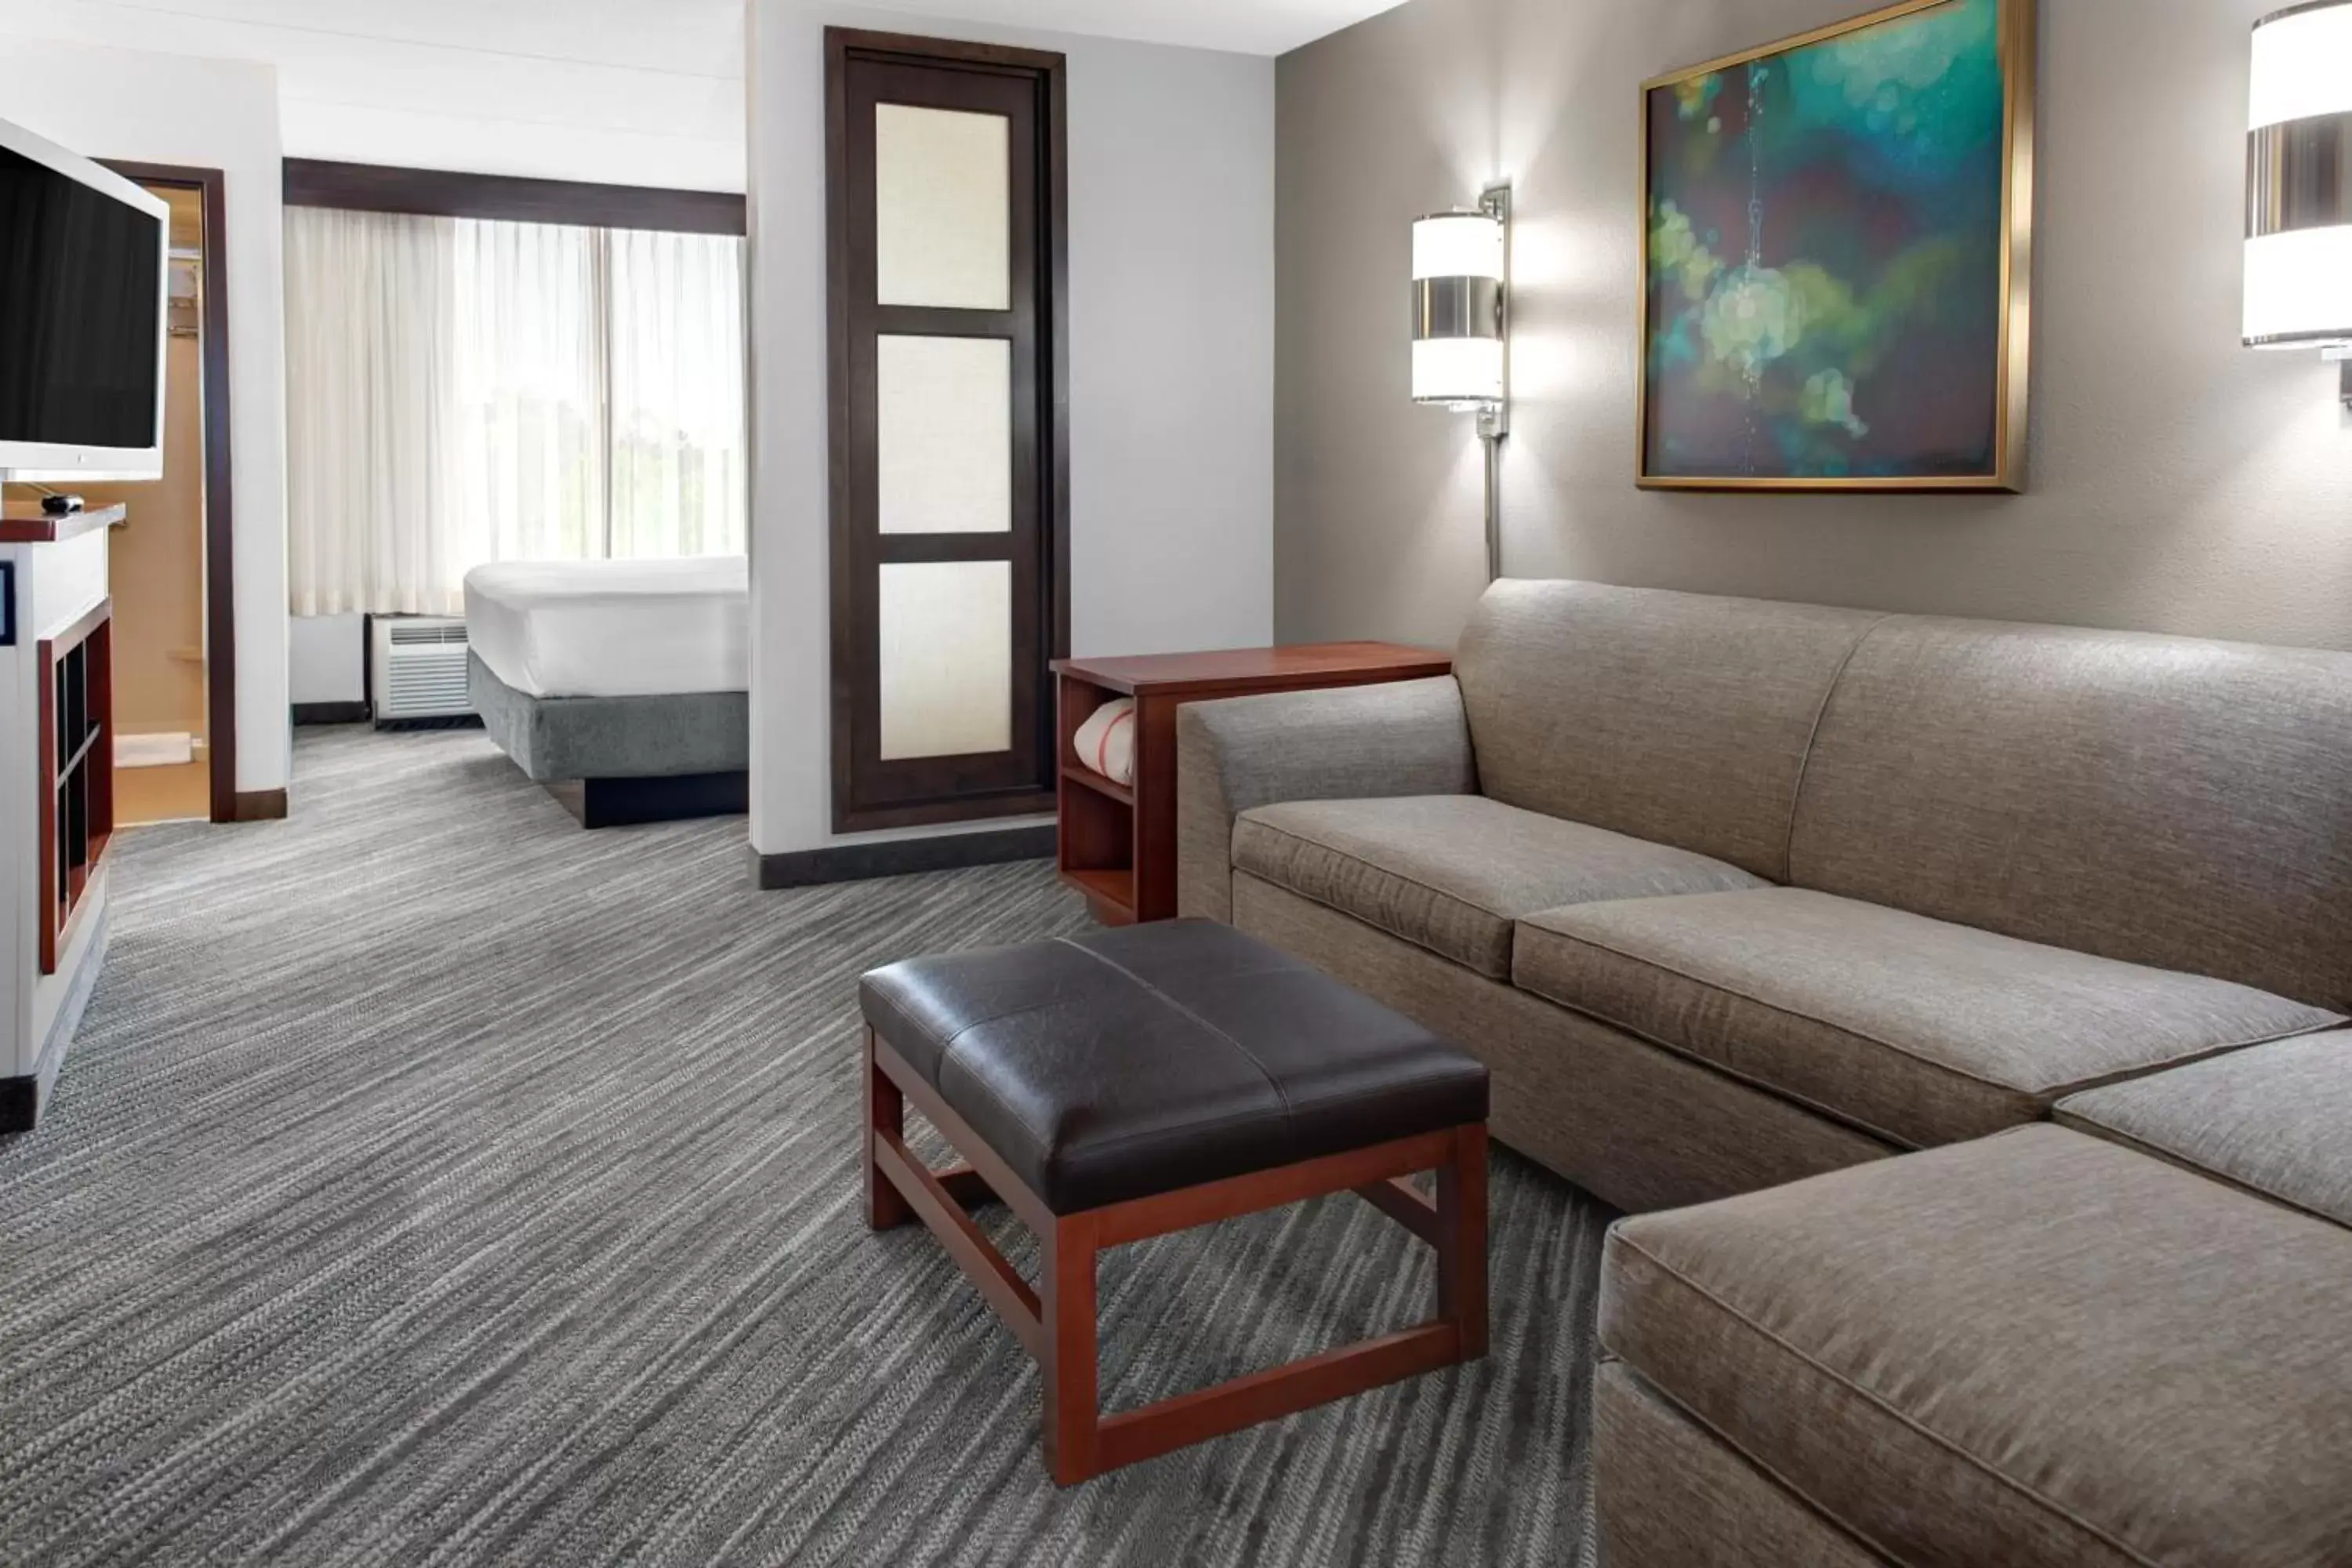 Specialty King Room with Sofa Bed in Hyatt Place Cincinnati Airport